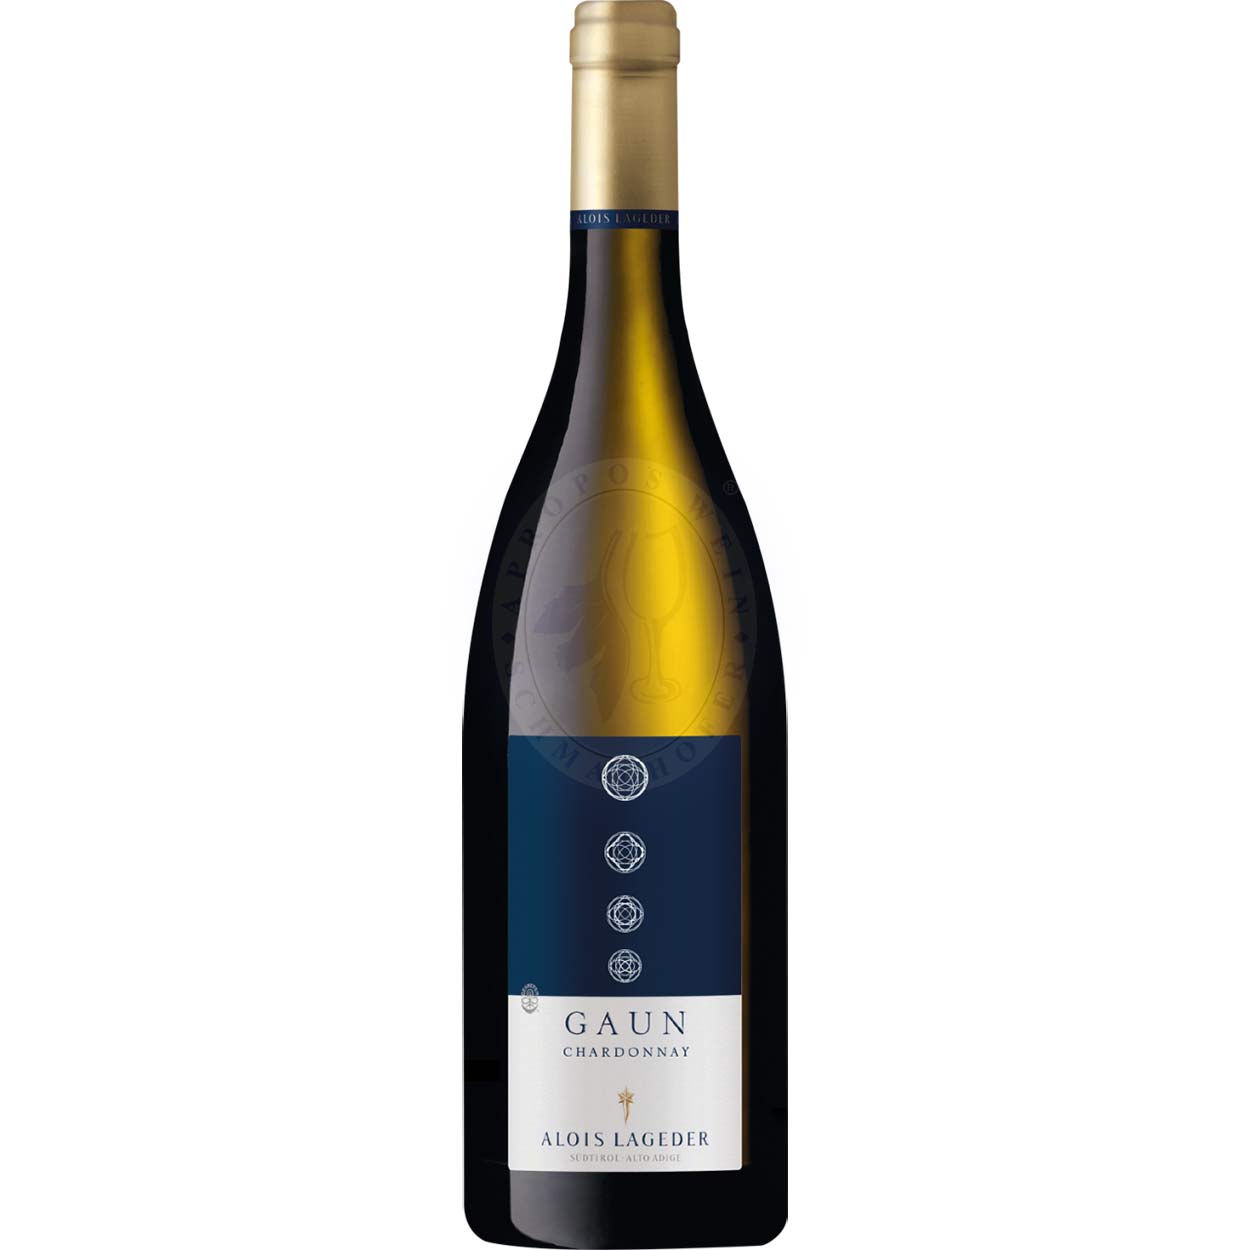 GAUN Chardonnay 2020 Alois Lageder 0,75l